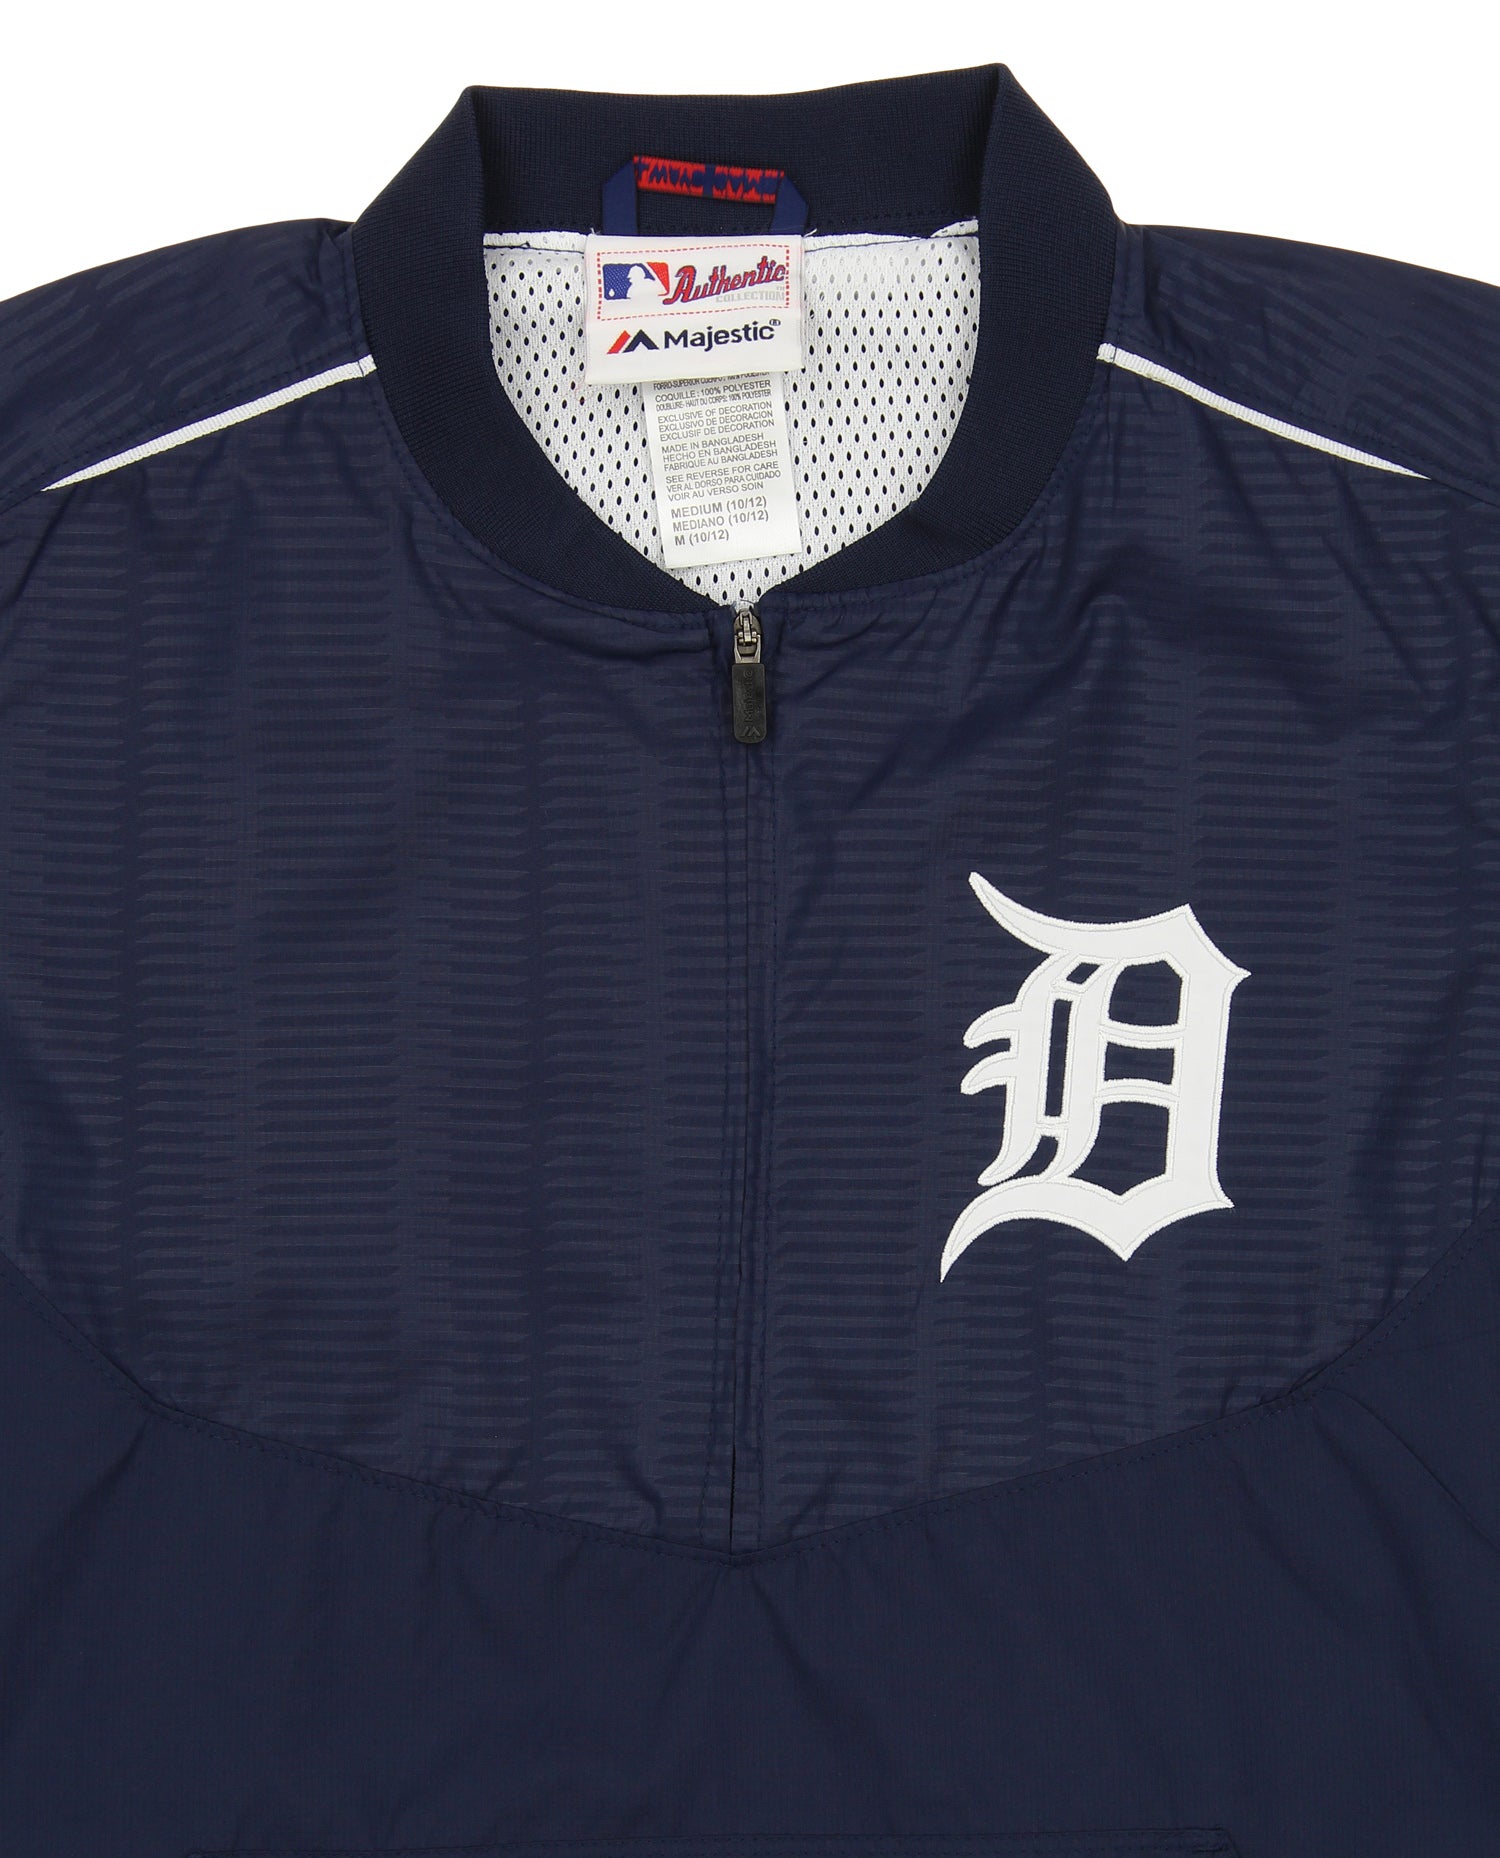 Detroit Tigers Kids Youth T-Shirt sz Large 14-16 New Mlb